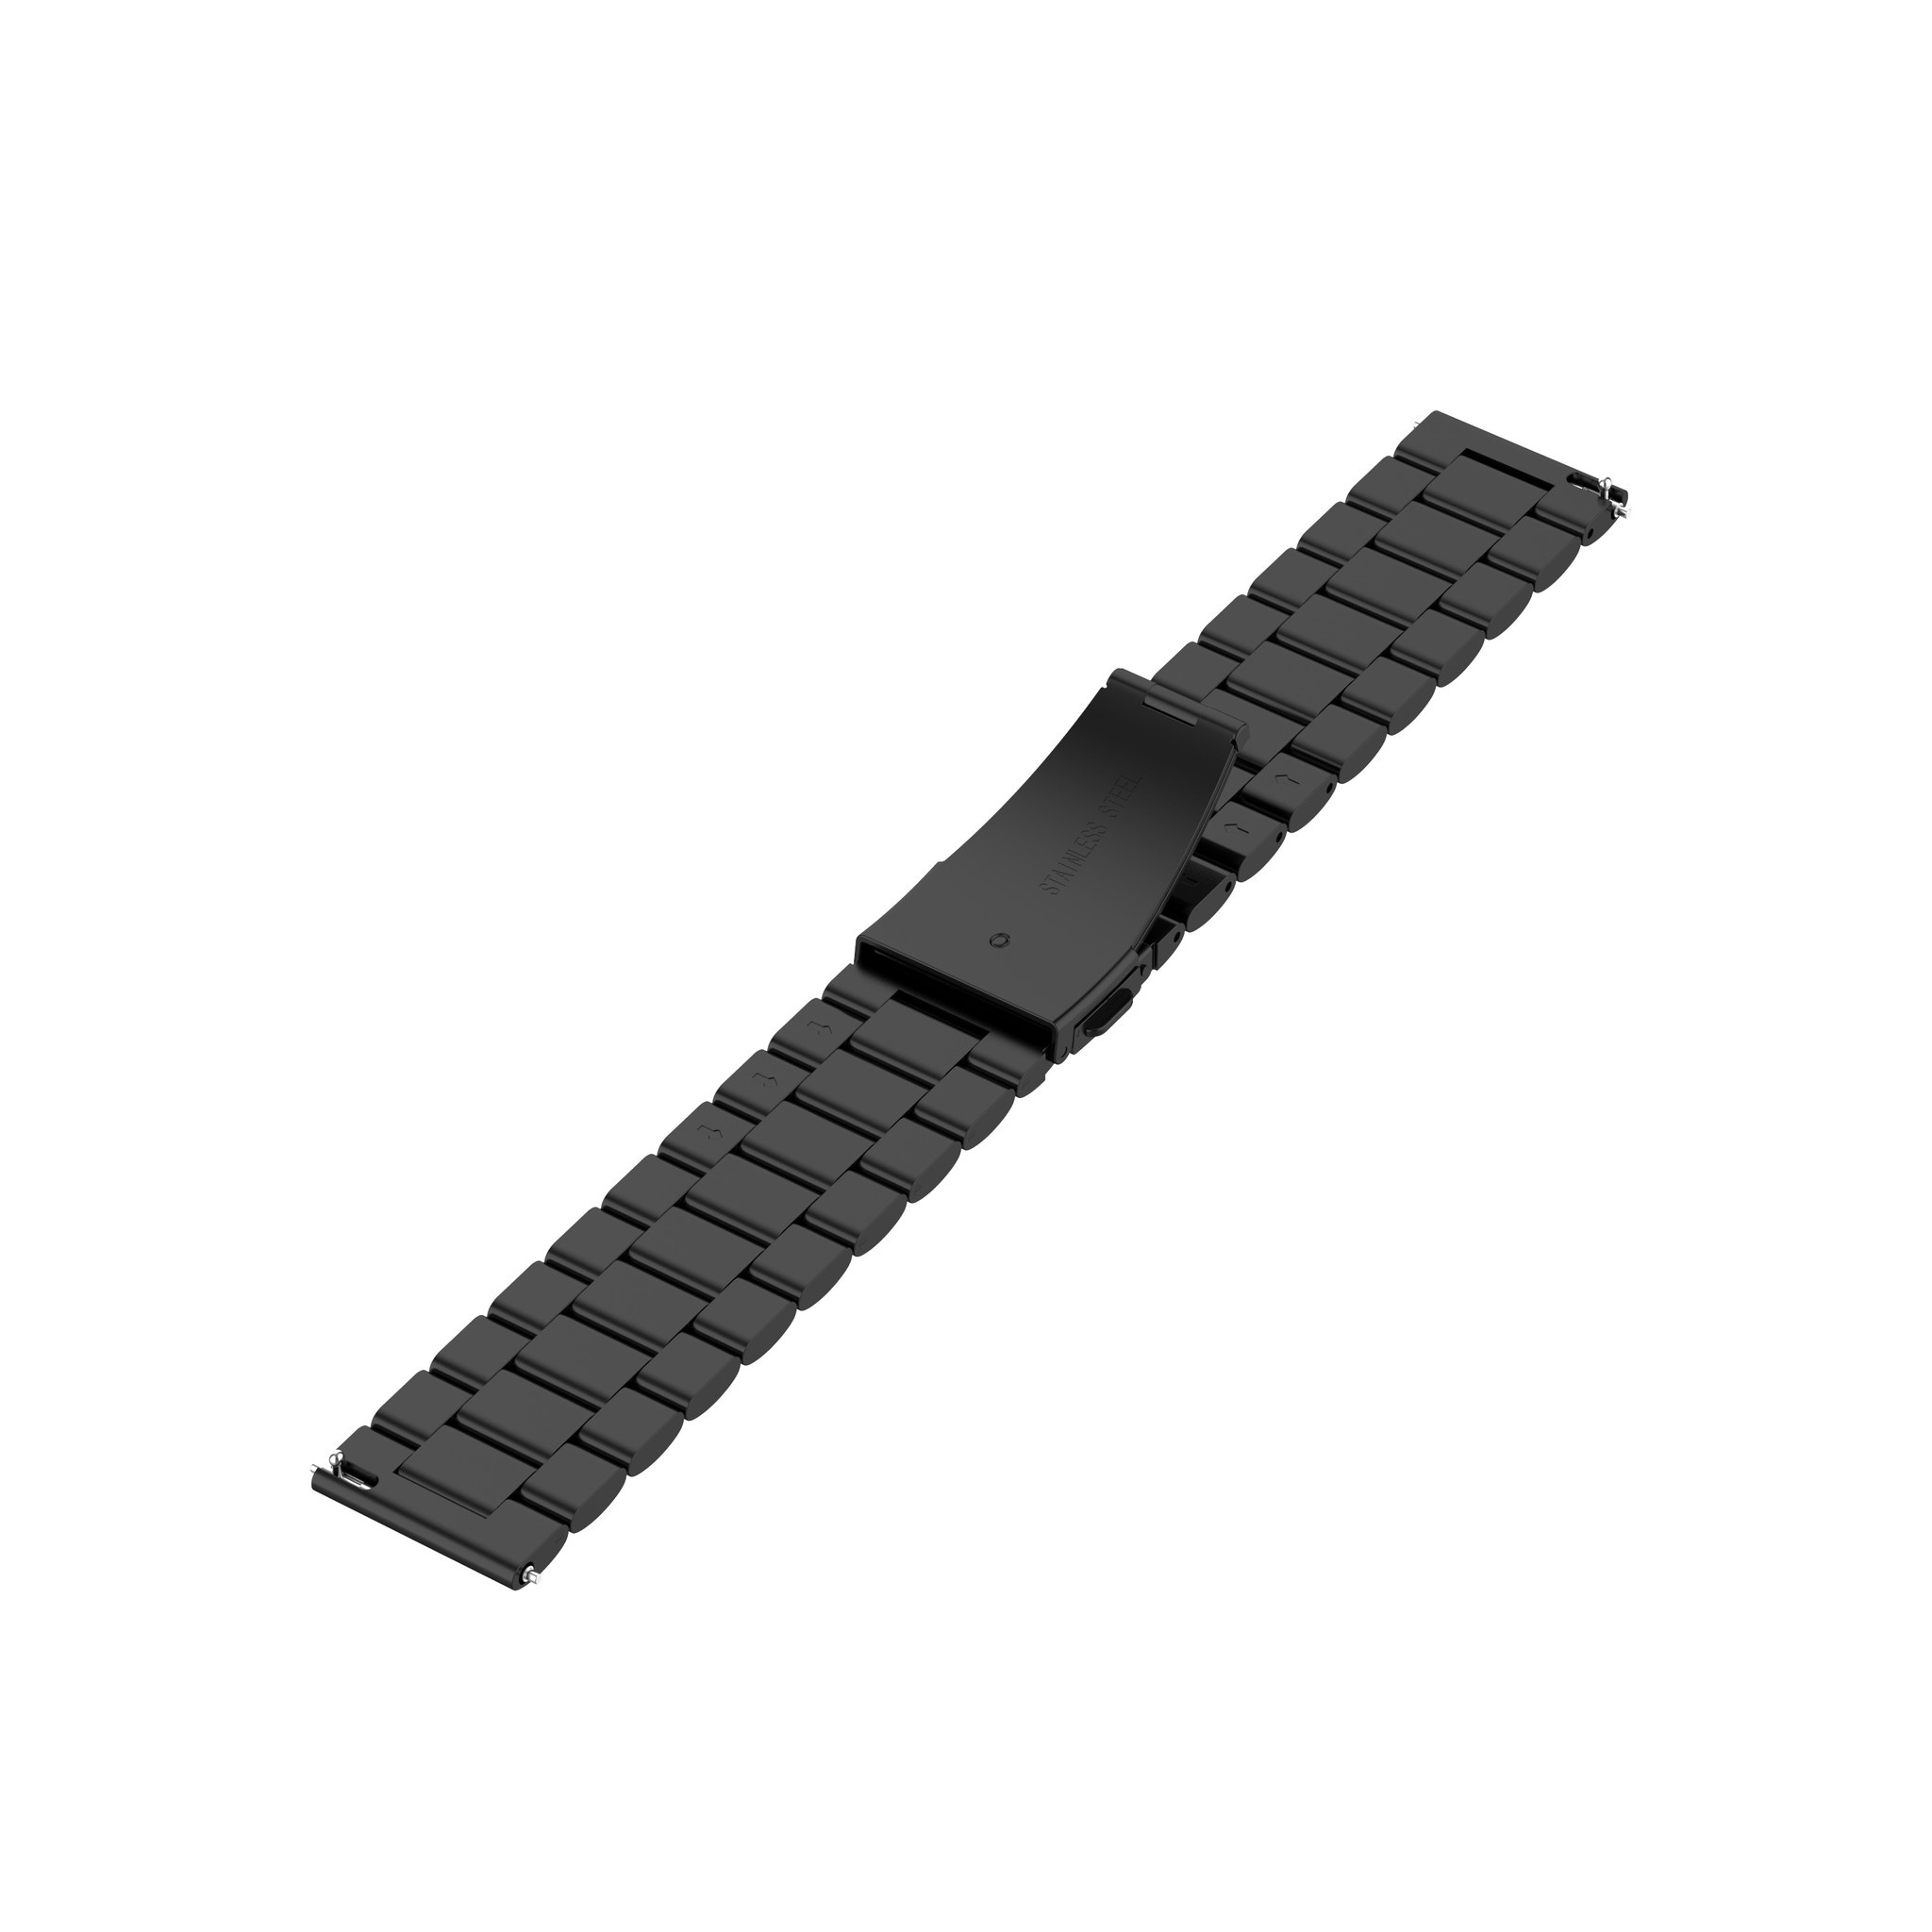 Huawei Watch GT kralen stalen schakel band - zwart